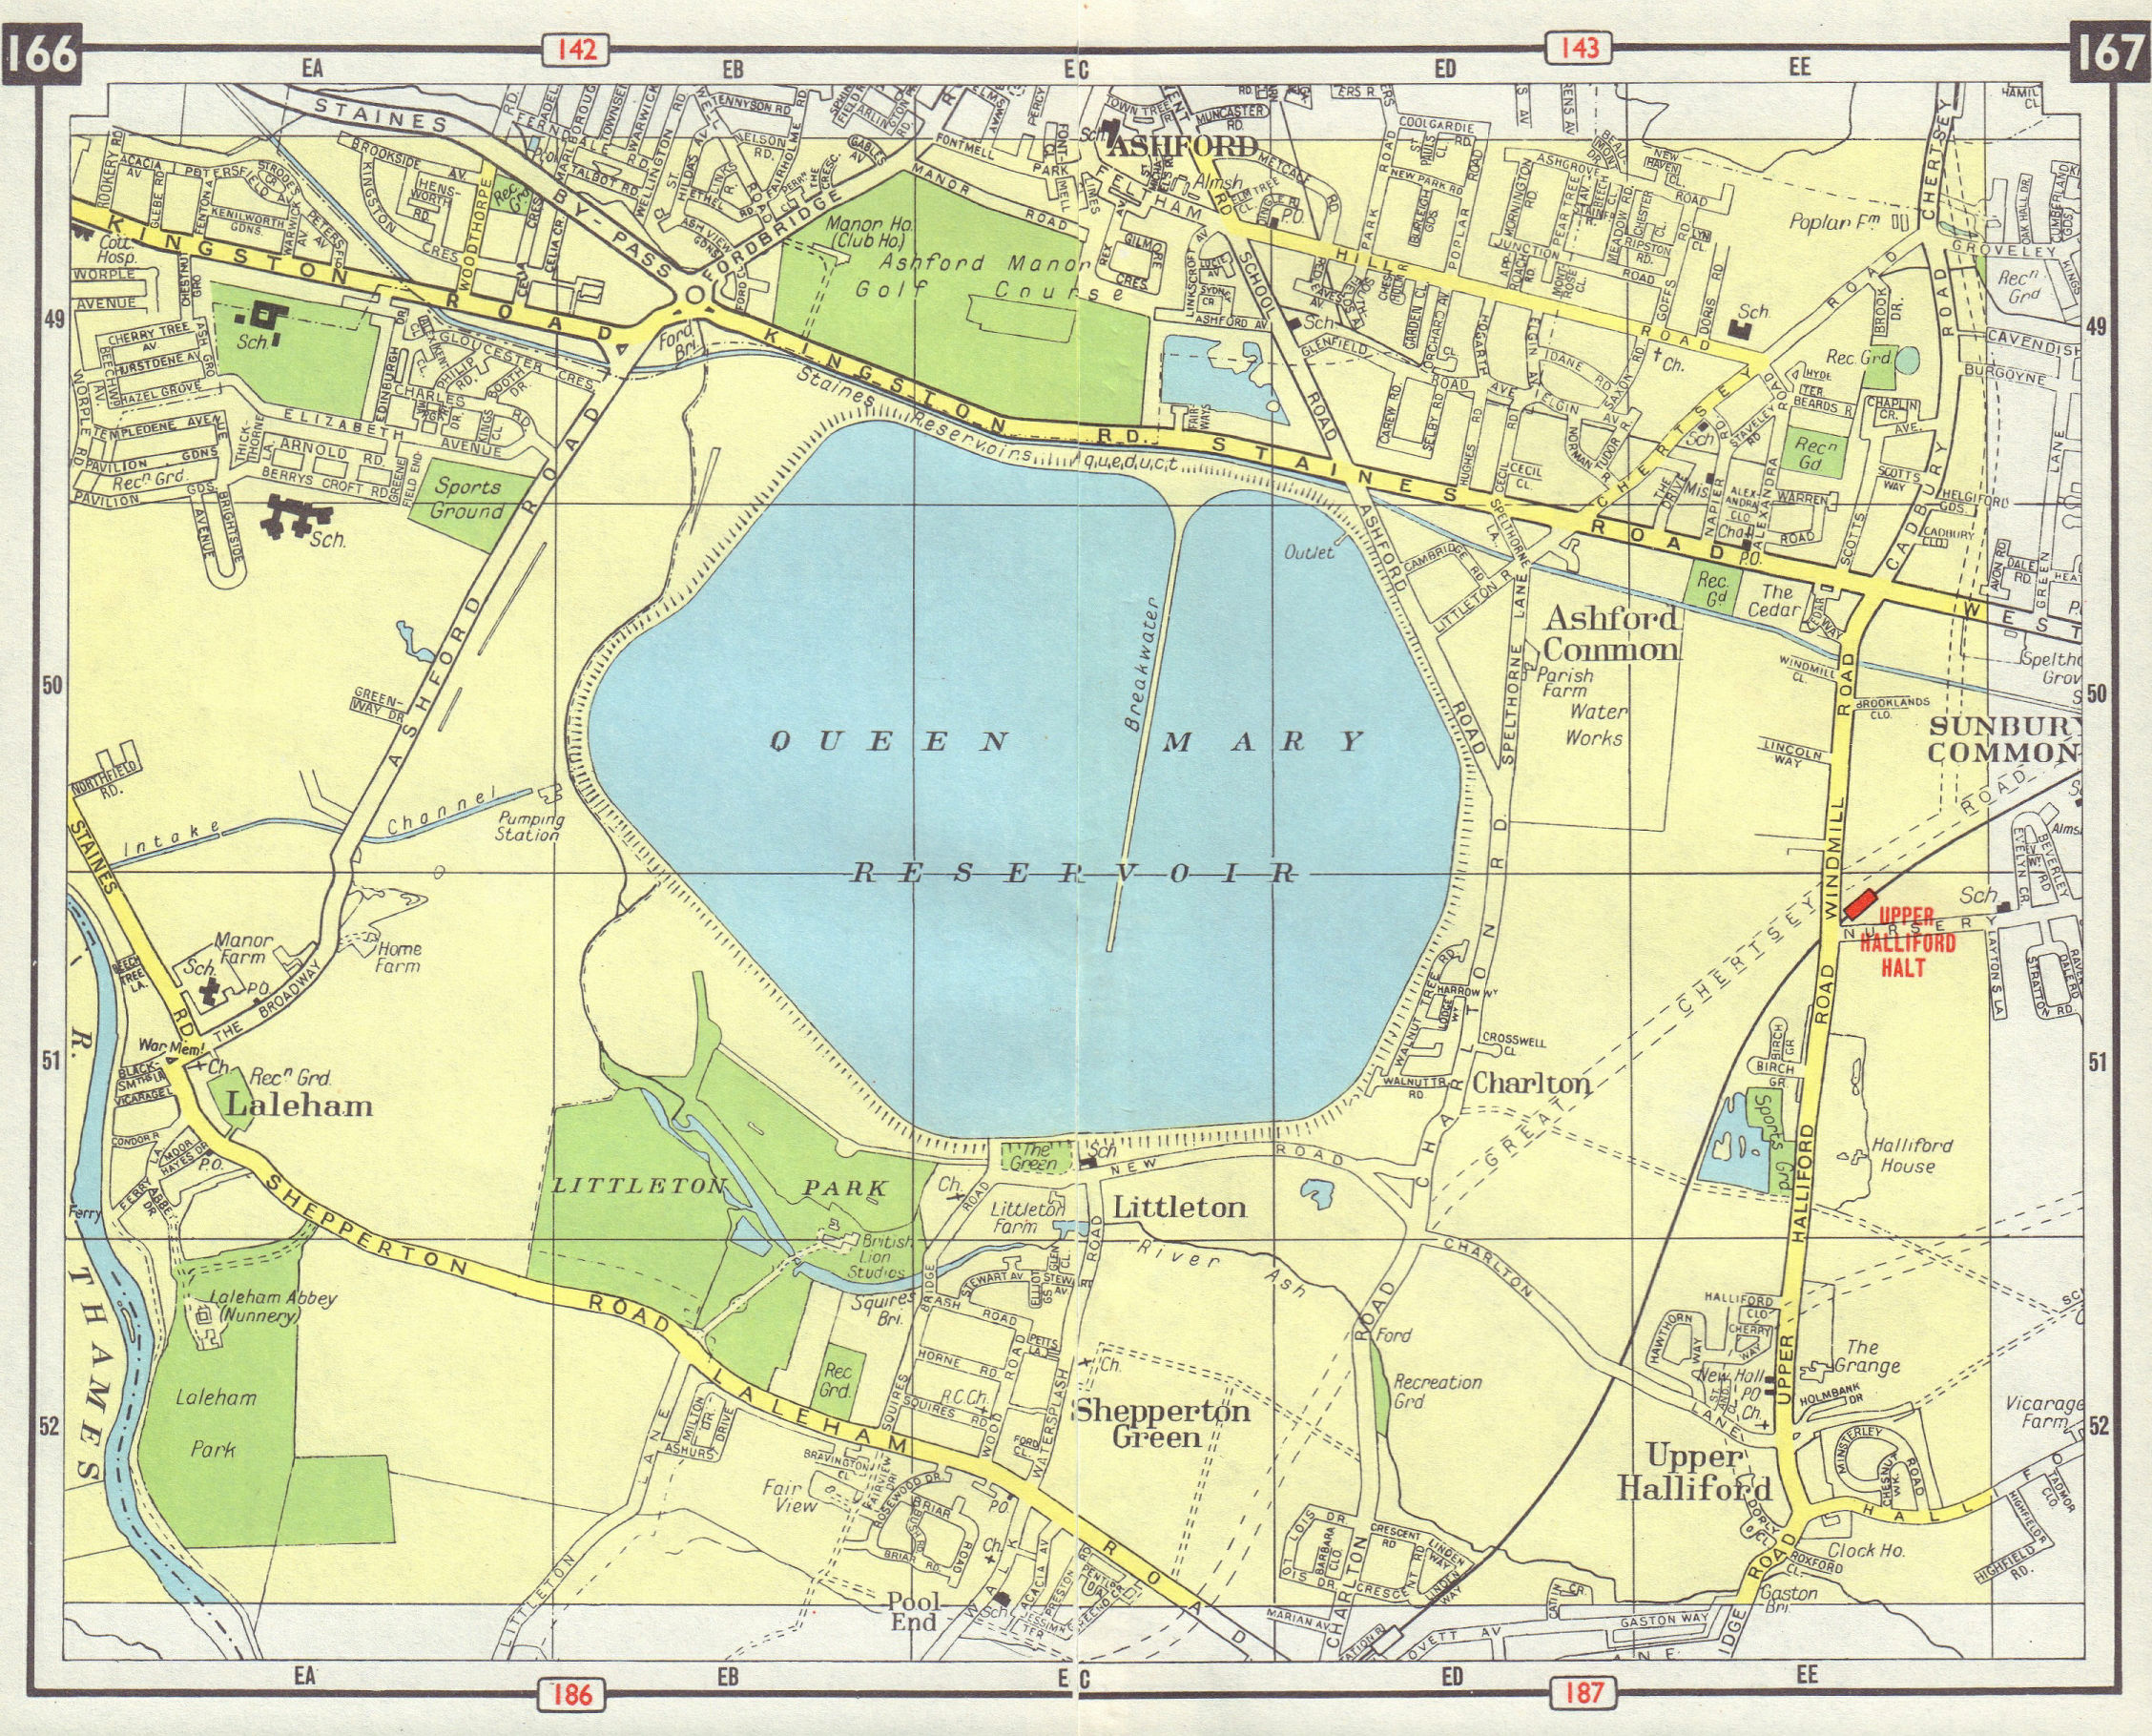 SW LONDON Ashford Laleham Shepperton Littleton Halliford M3 projected 1965 map